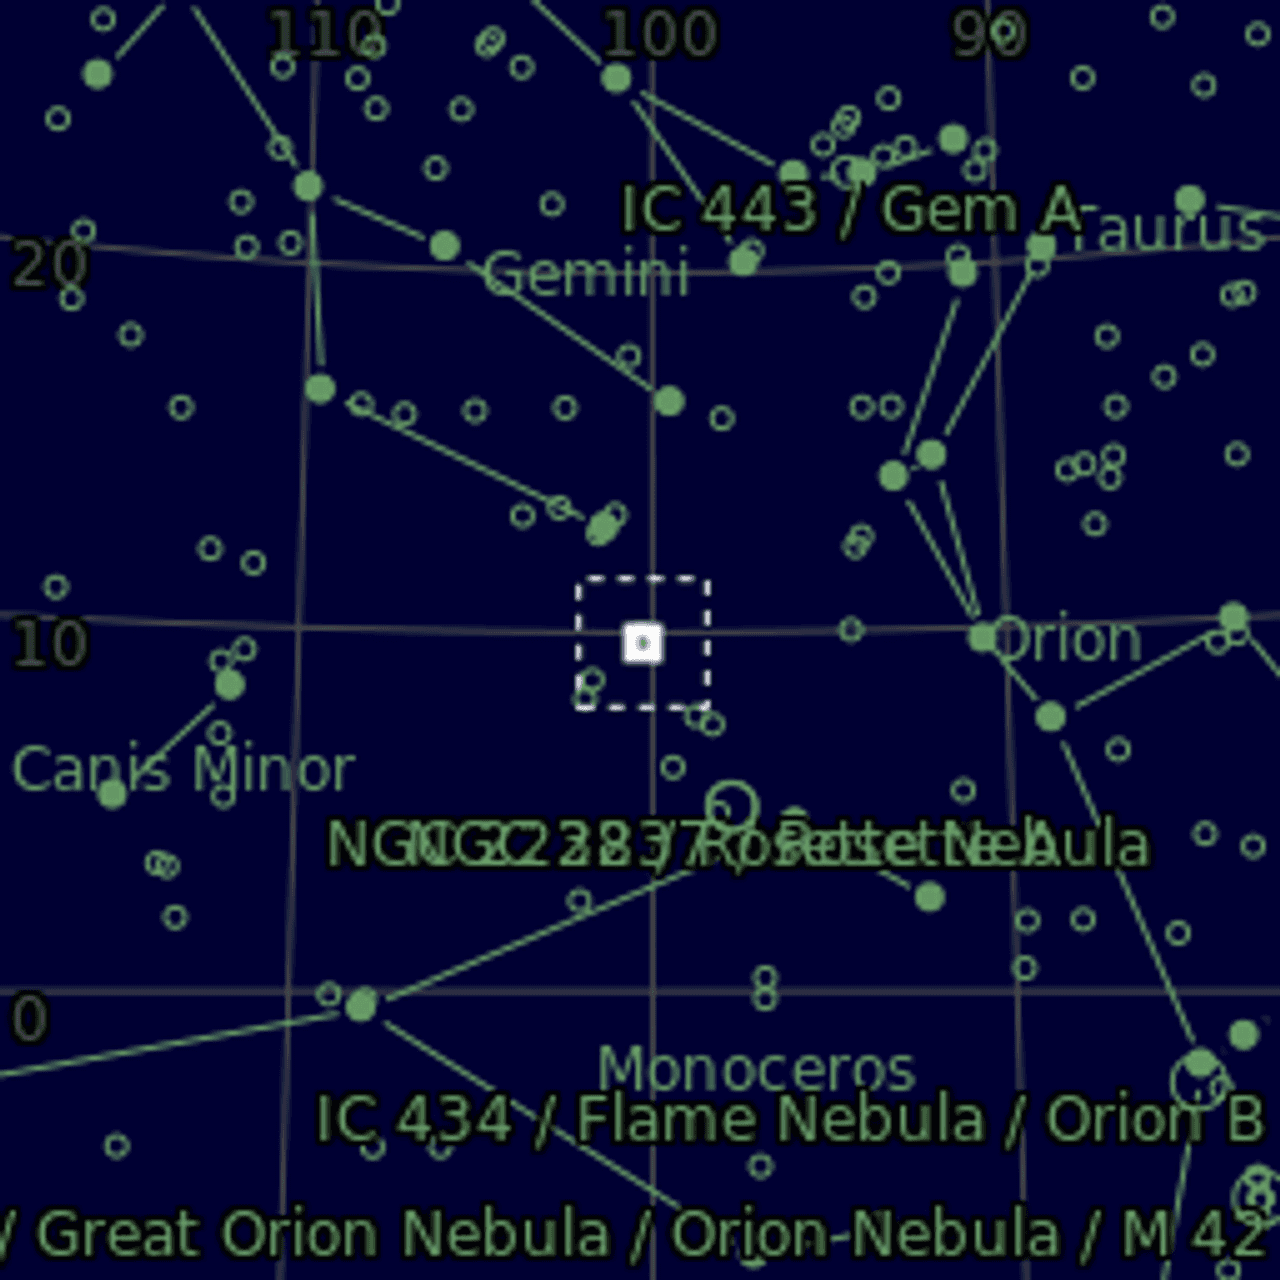 Star map of NGC2264